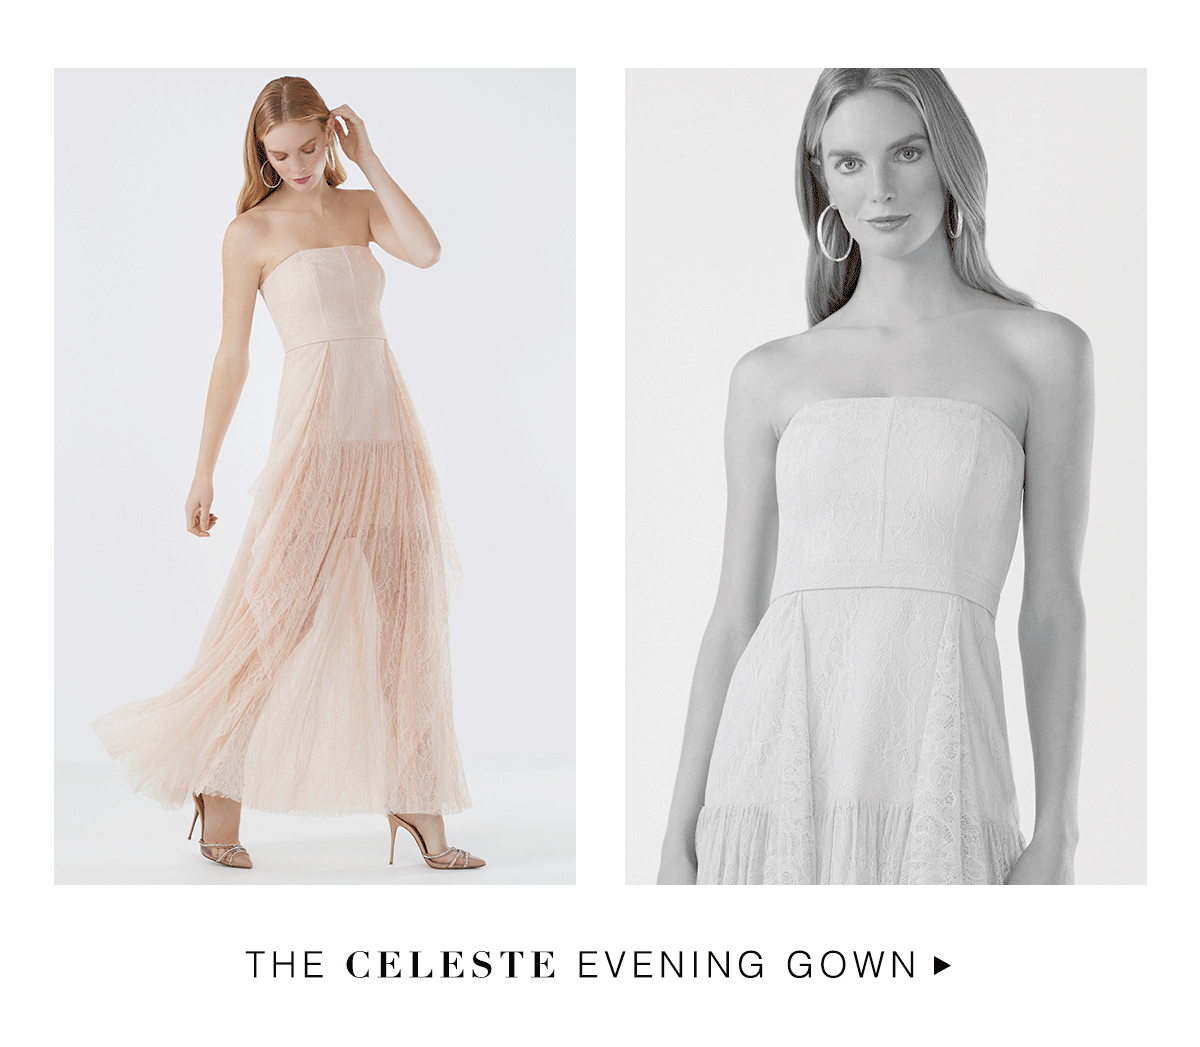 The Celeste Evening Gown